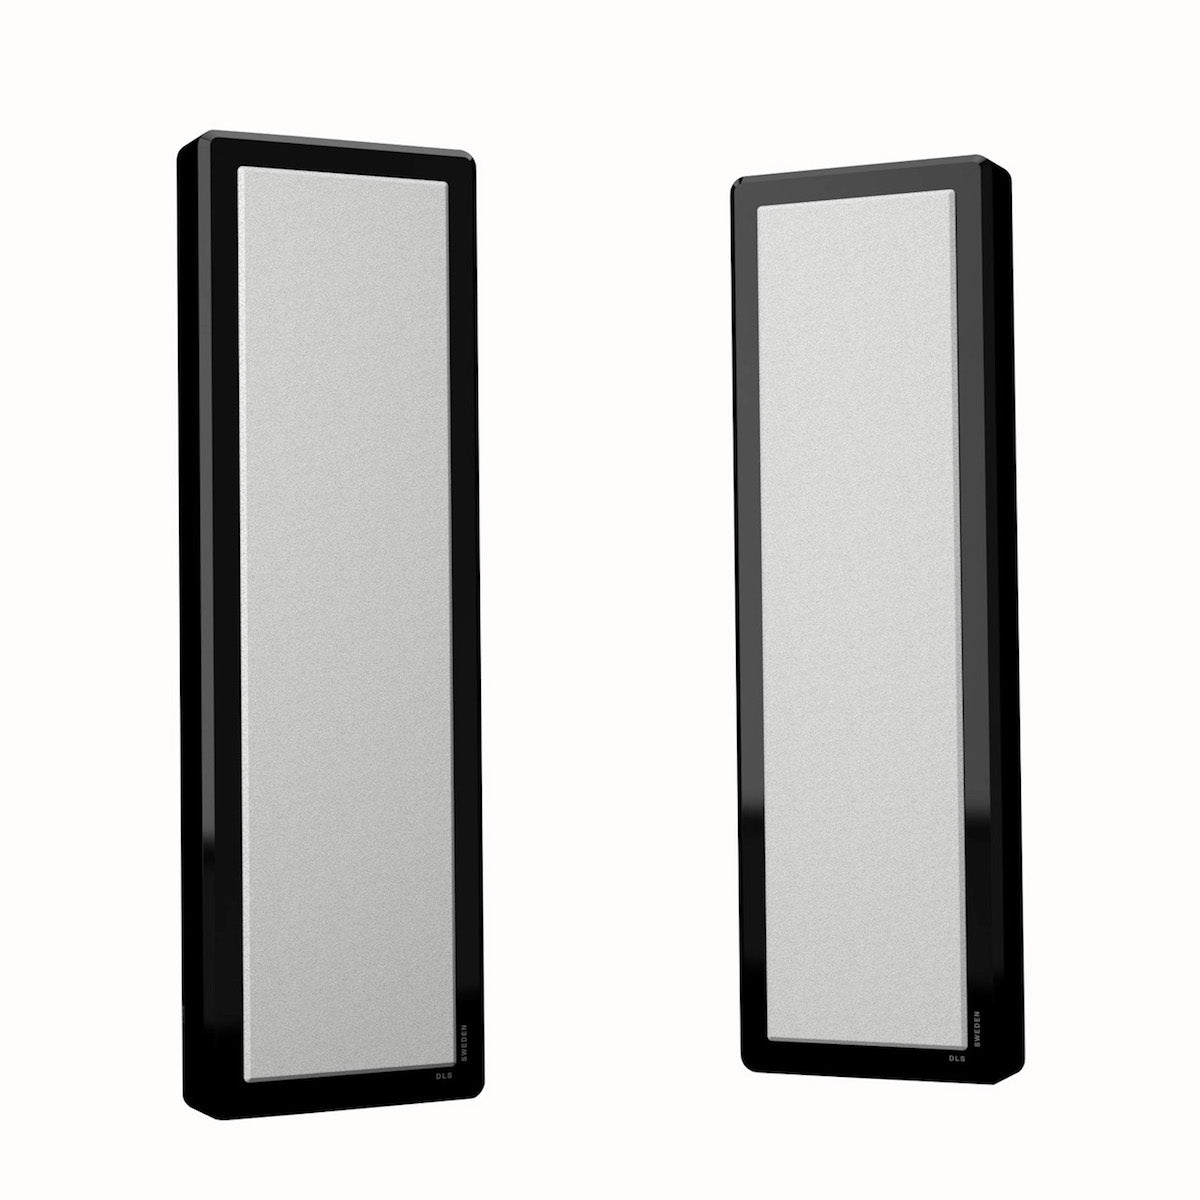 DLS Flatbox M-Two - On-wall Speaker - Pair - AVStore